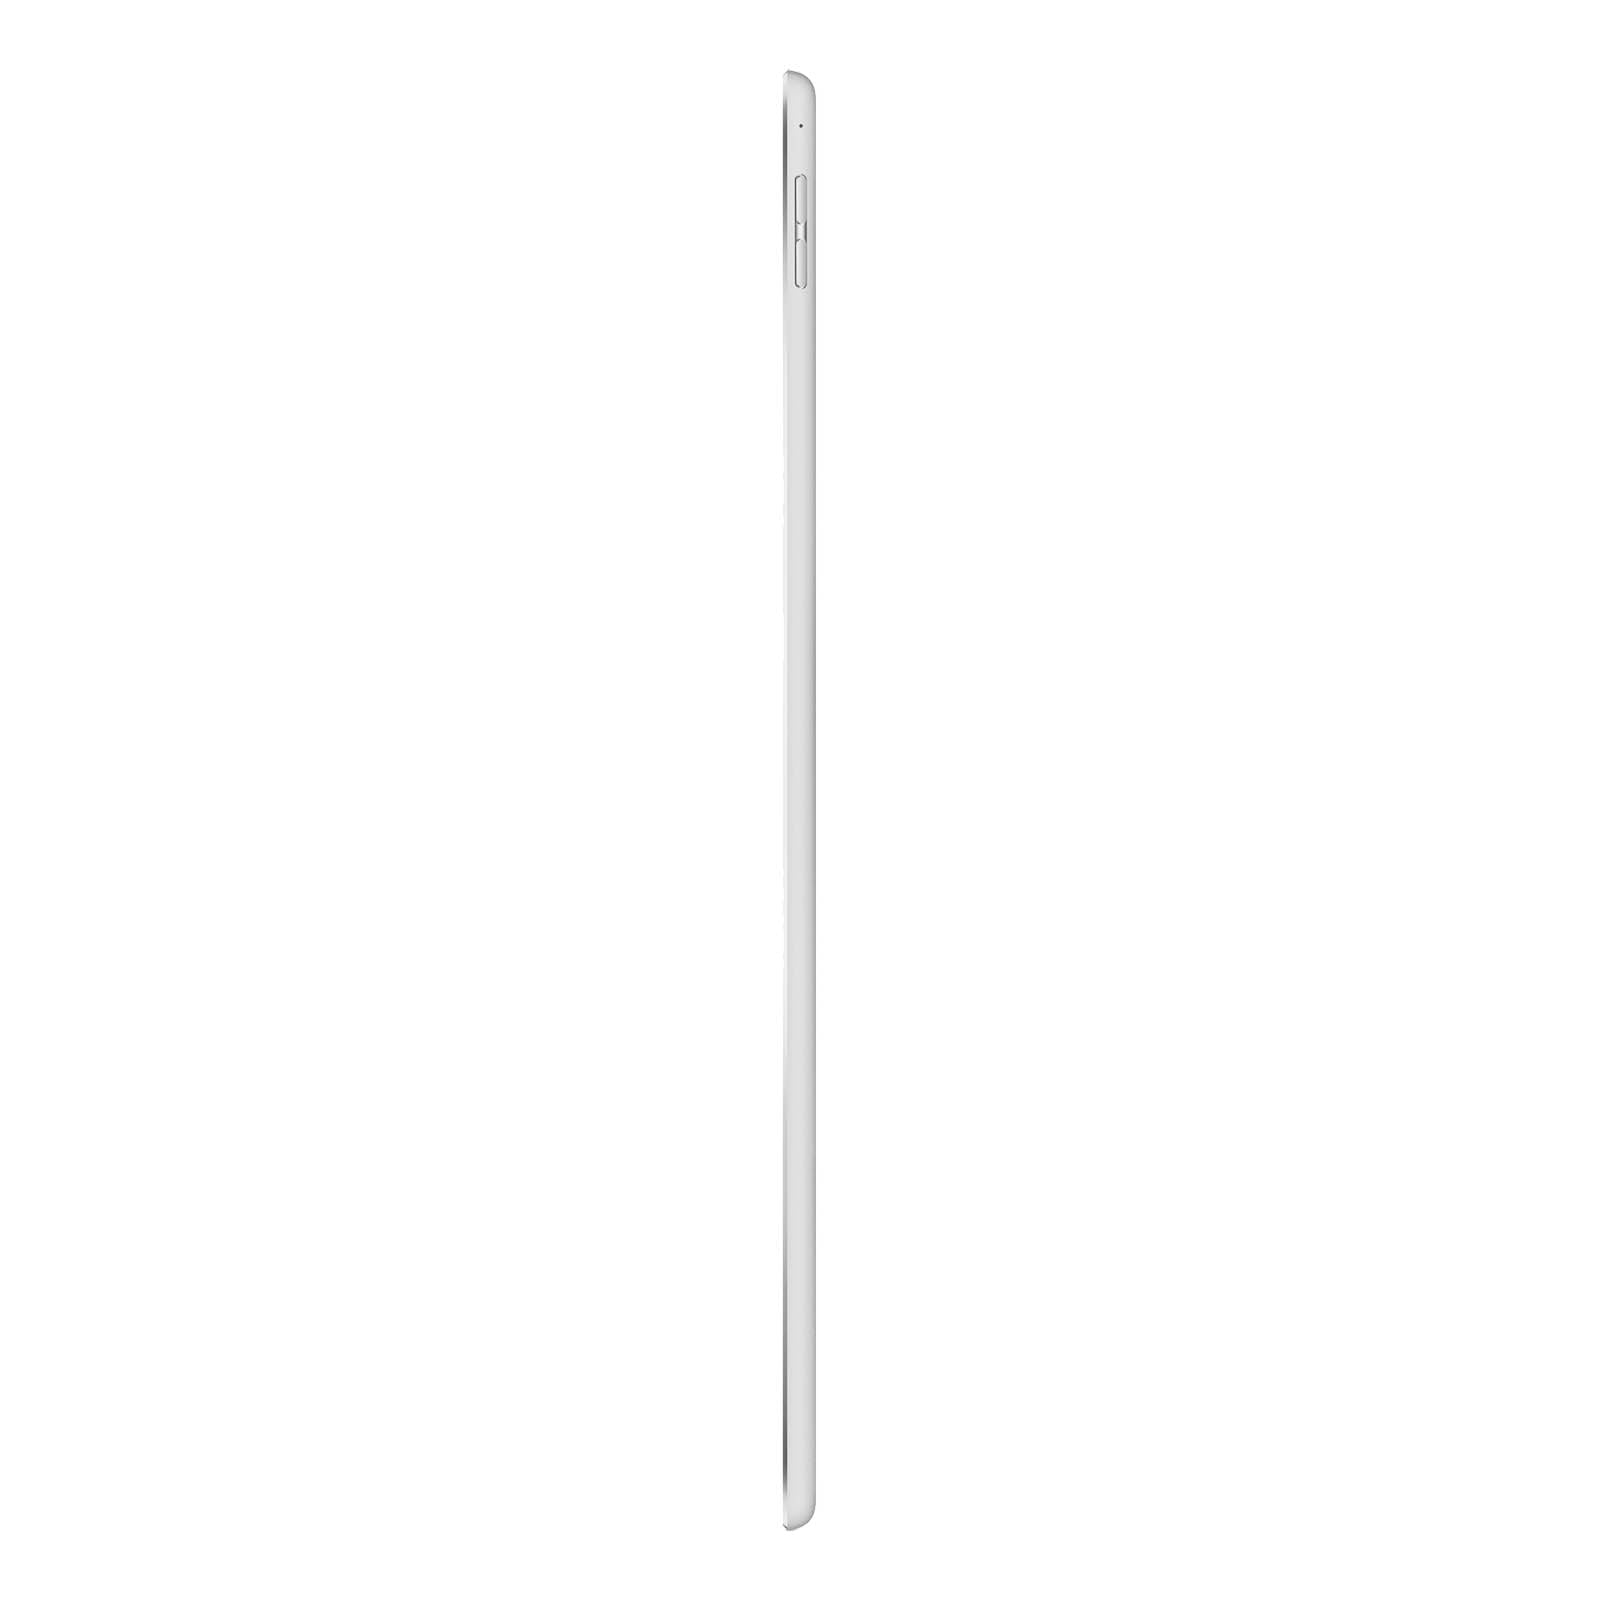 iPad Pro 12.9 Inch 2nd Gen 64GB Silver Good - Unlocked